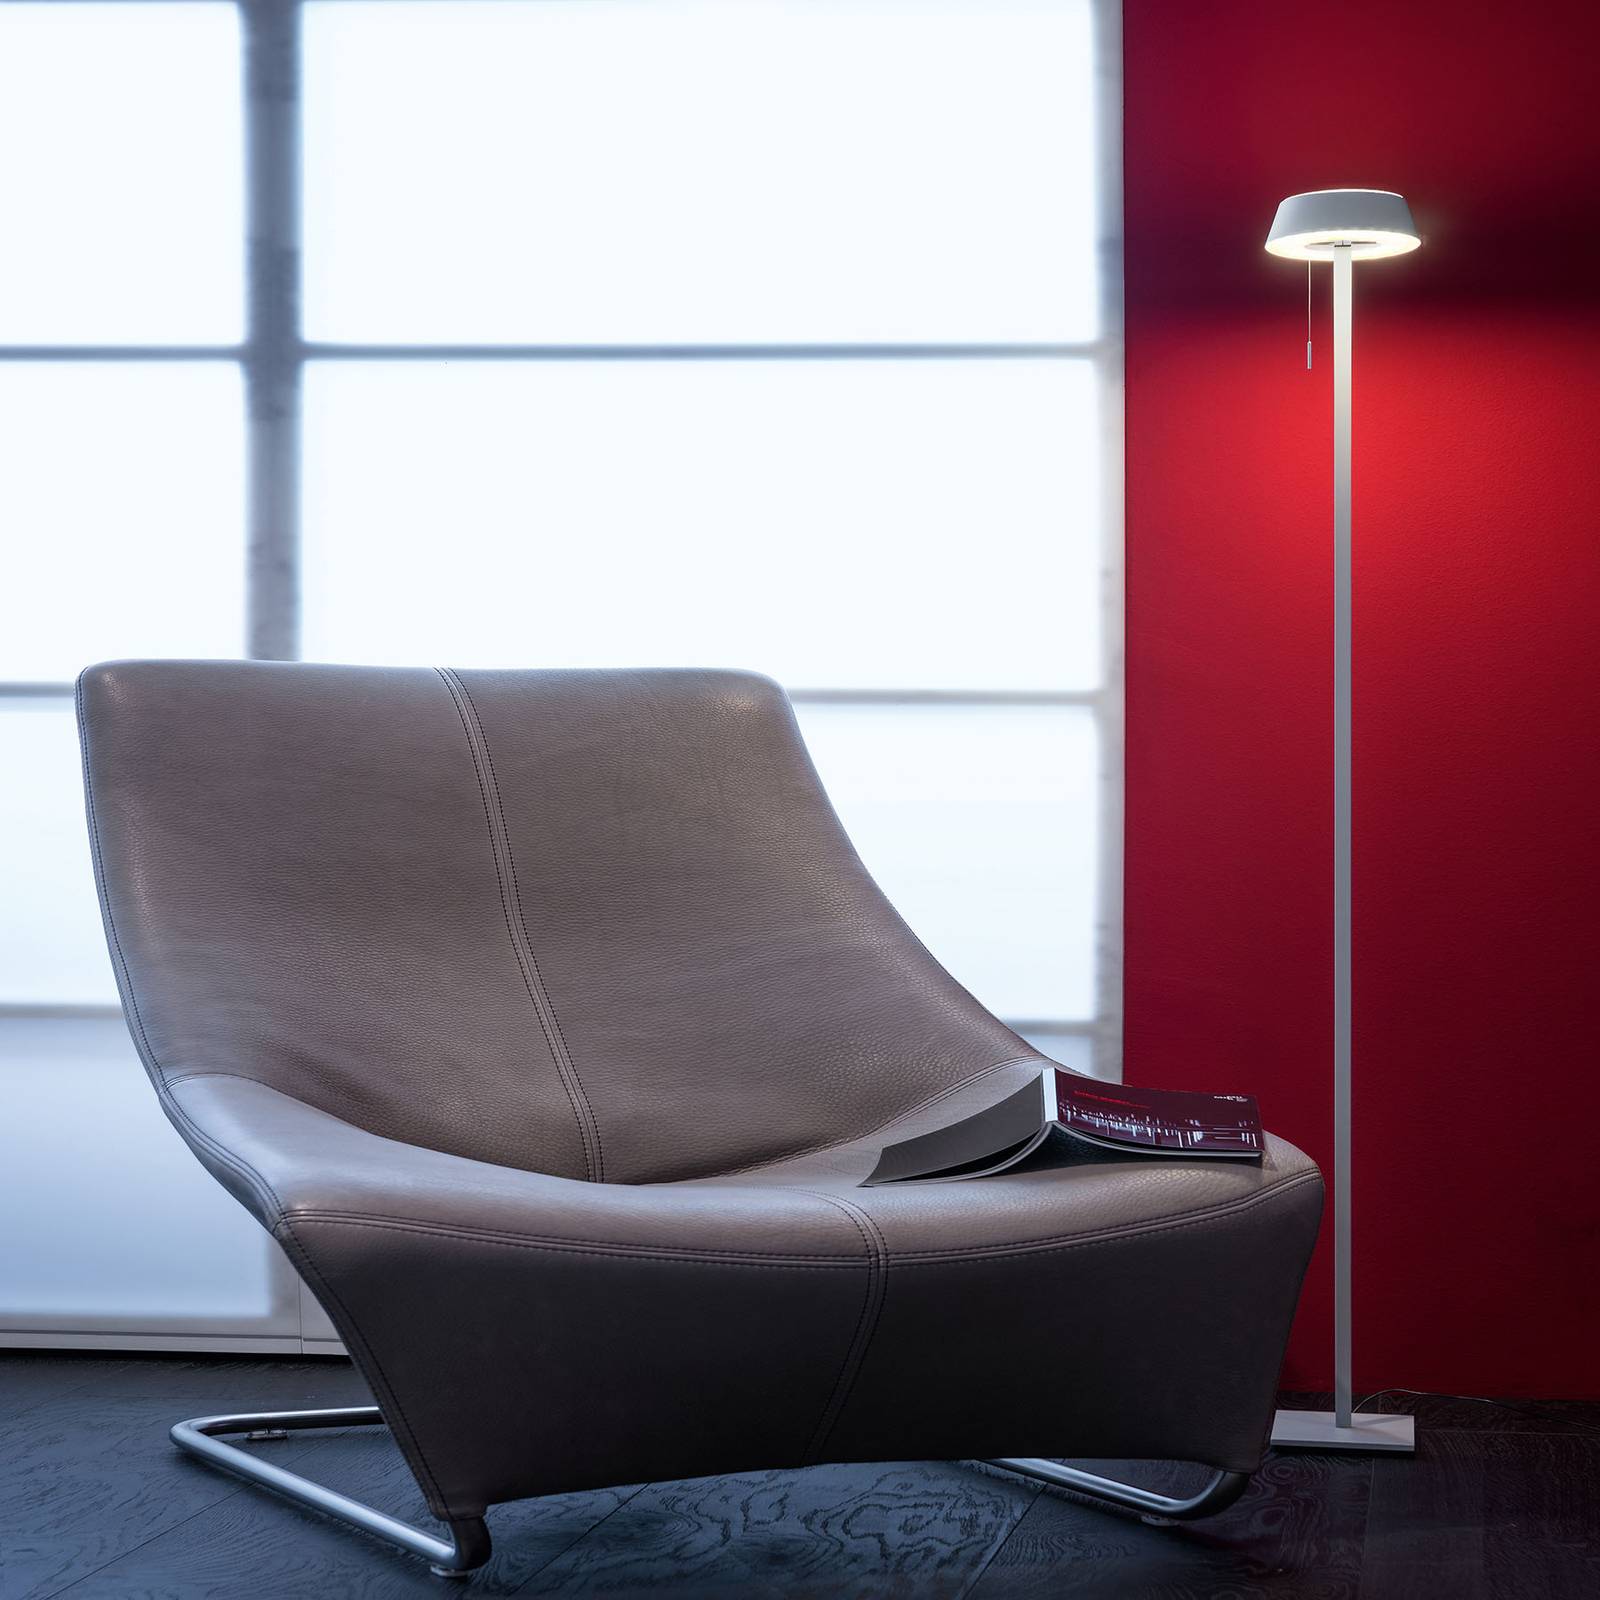 OLIGO Glance LED-Stehlampe grau matt von Oligo